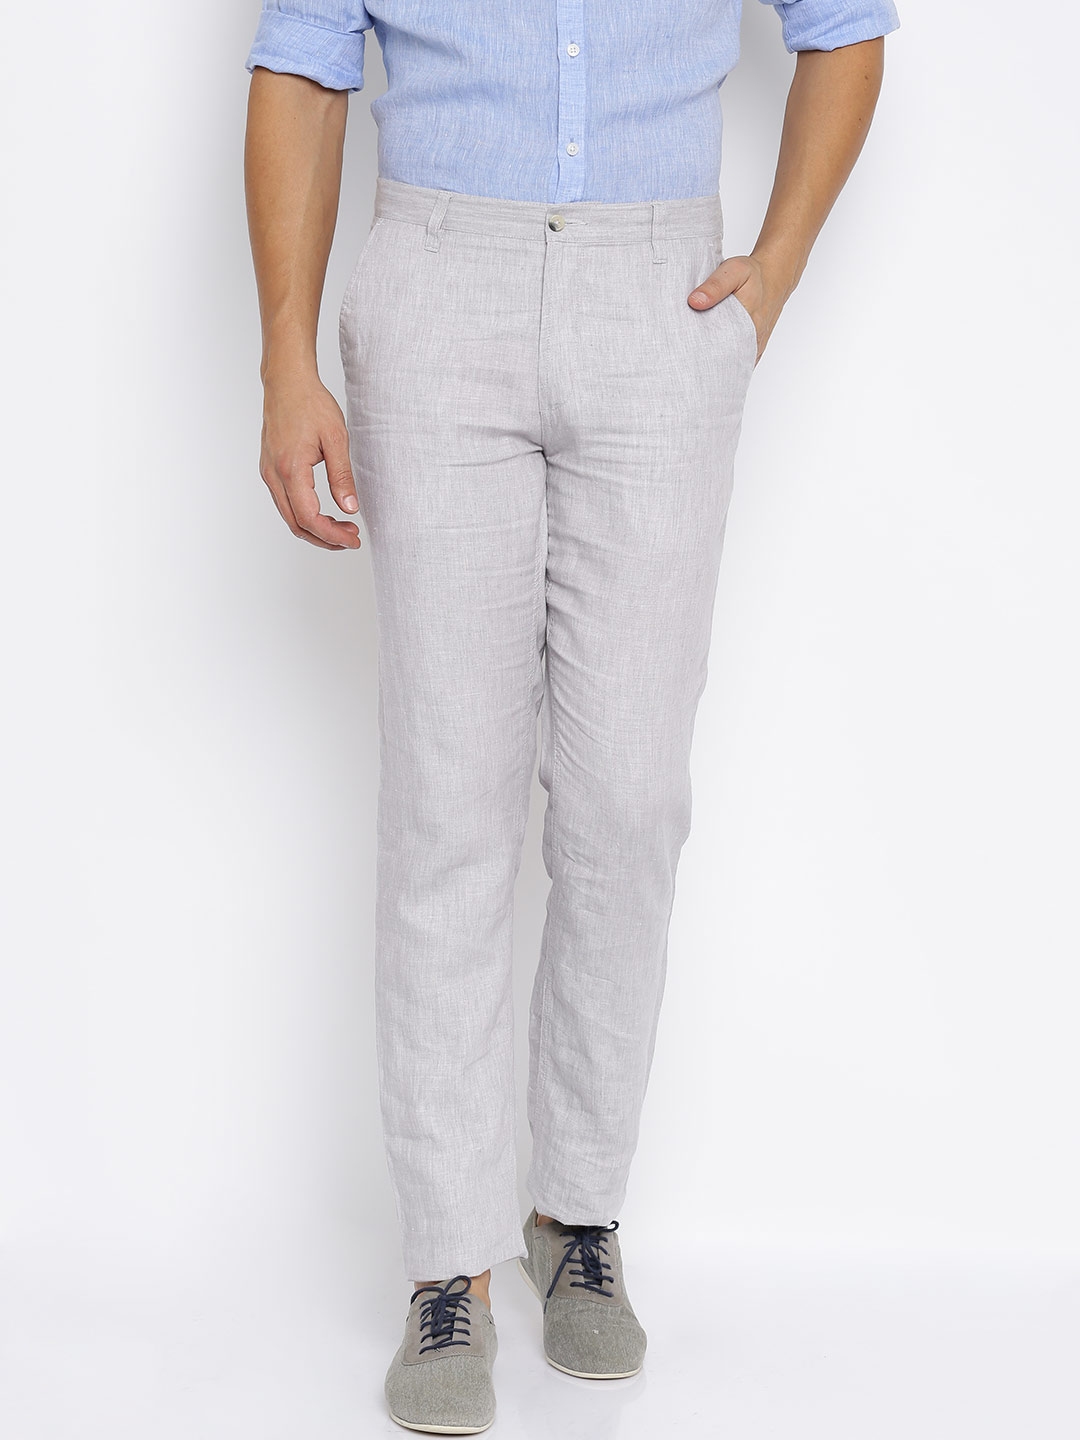 Grey Linen Trousers  Buy Grey Linen Trousers online in India